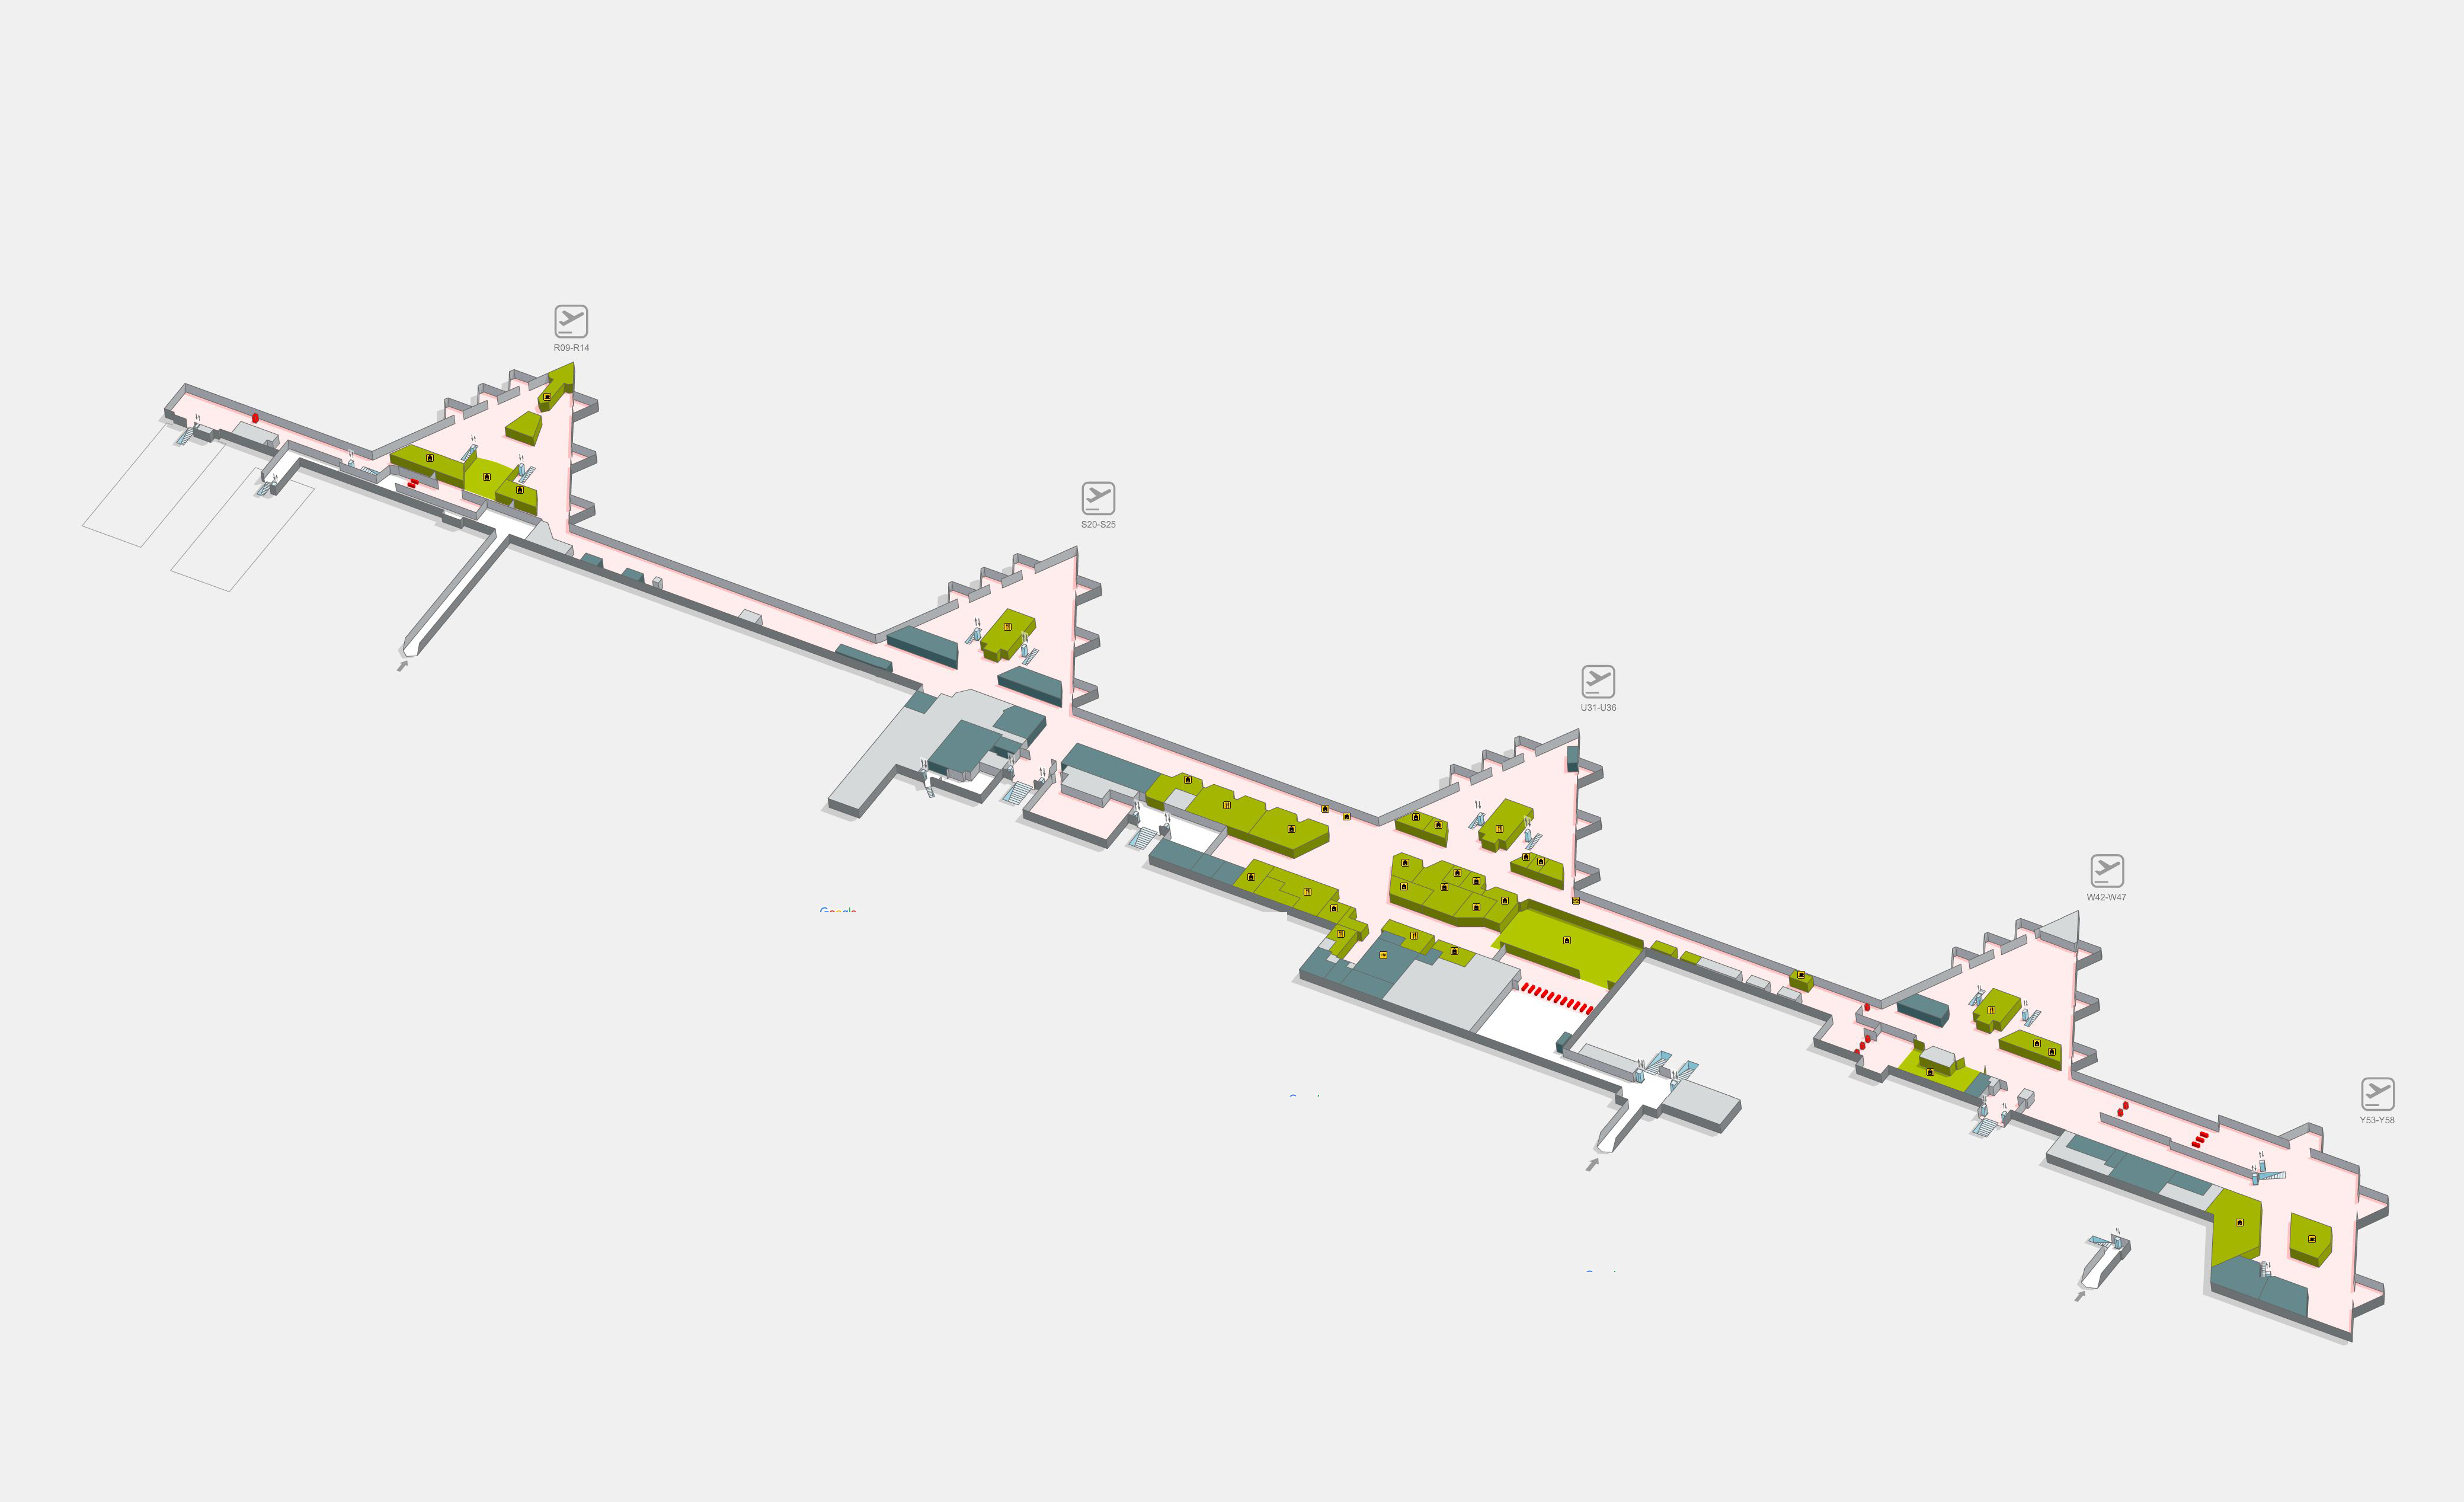 Barcelona Airport Map (BCN) Printable Terminal Maps